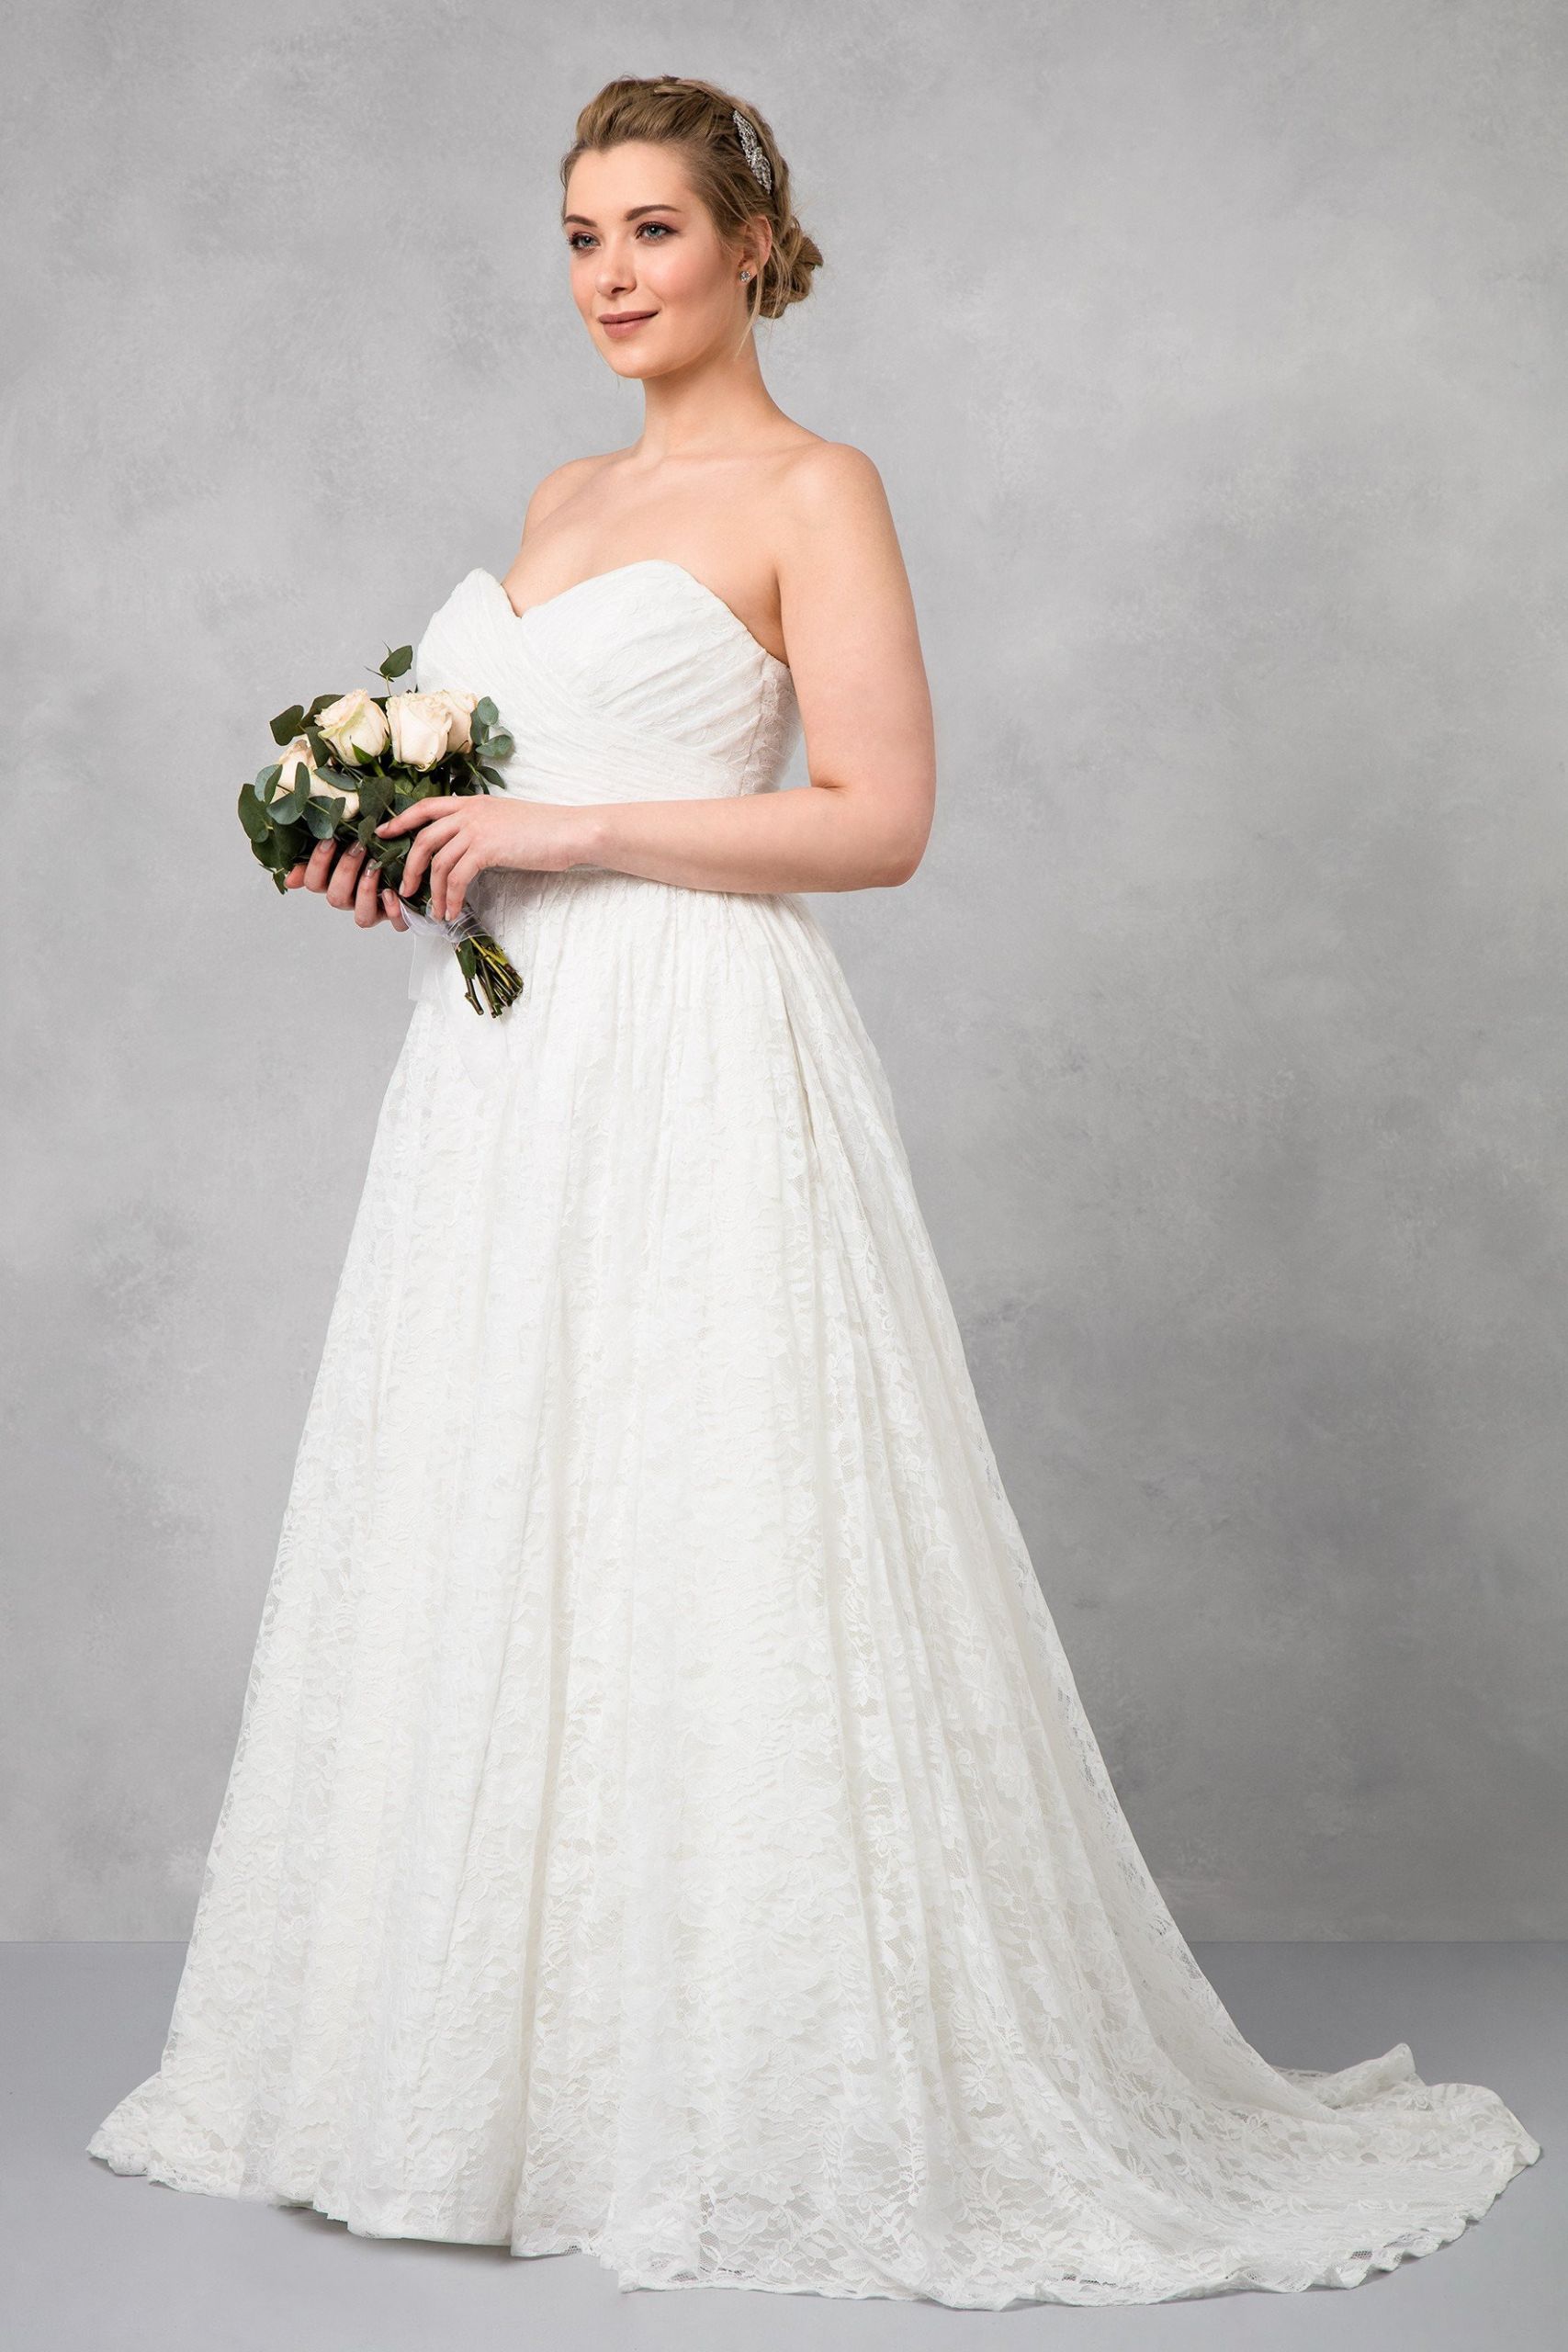 Lace Sweetheart Wedding Dress
 Lace Sweetheart Plus Size Ball Gown Wedding Dress 9WG3829